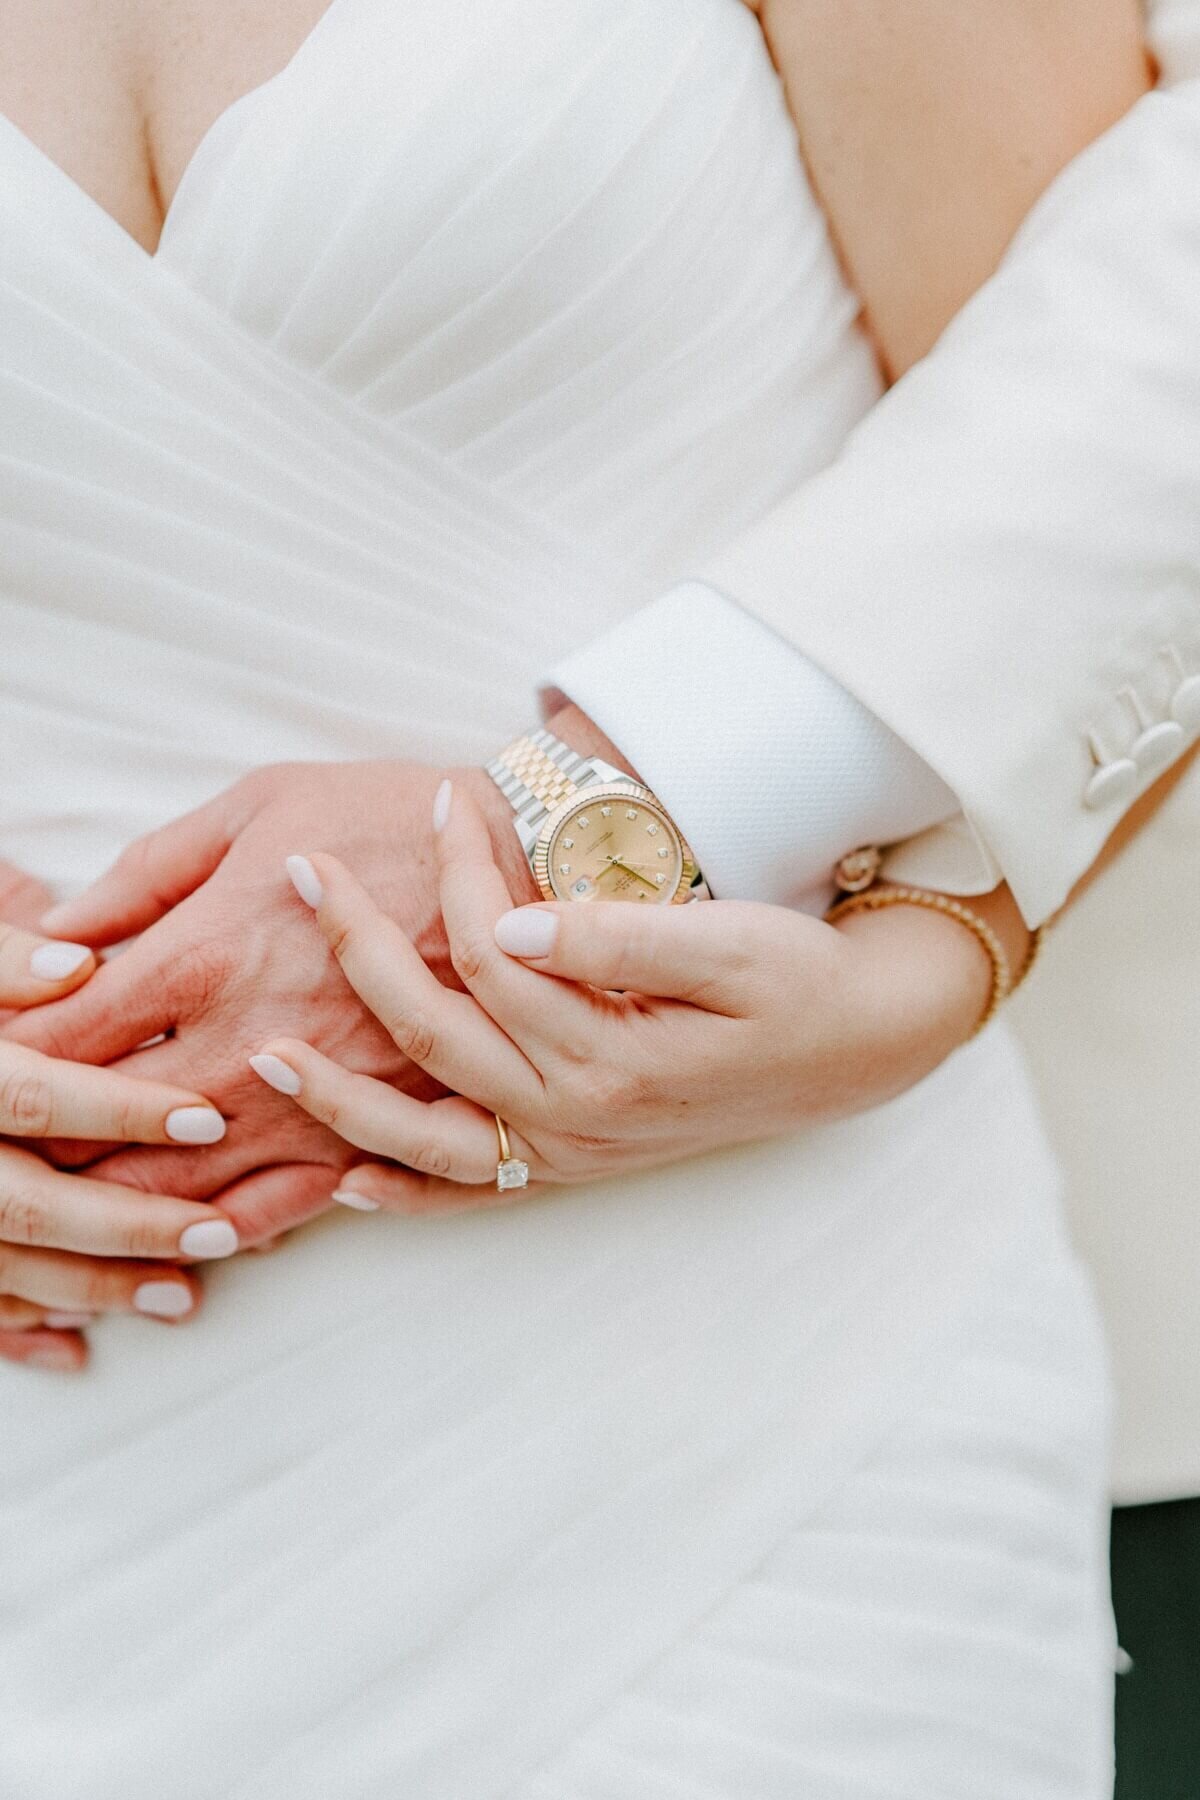 7-kara-loryn-photography-bride-and-groom-hands